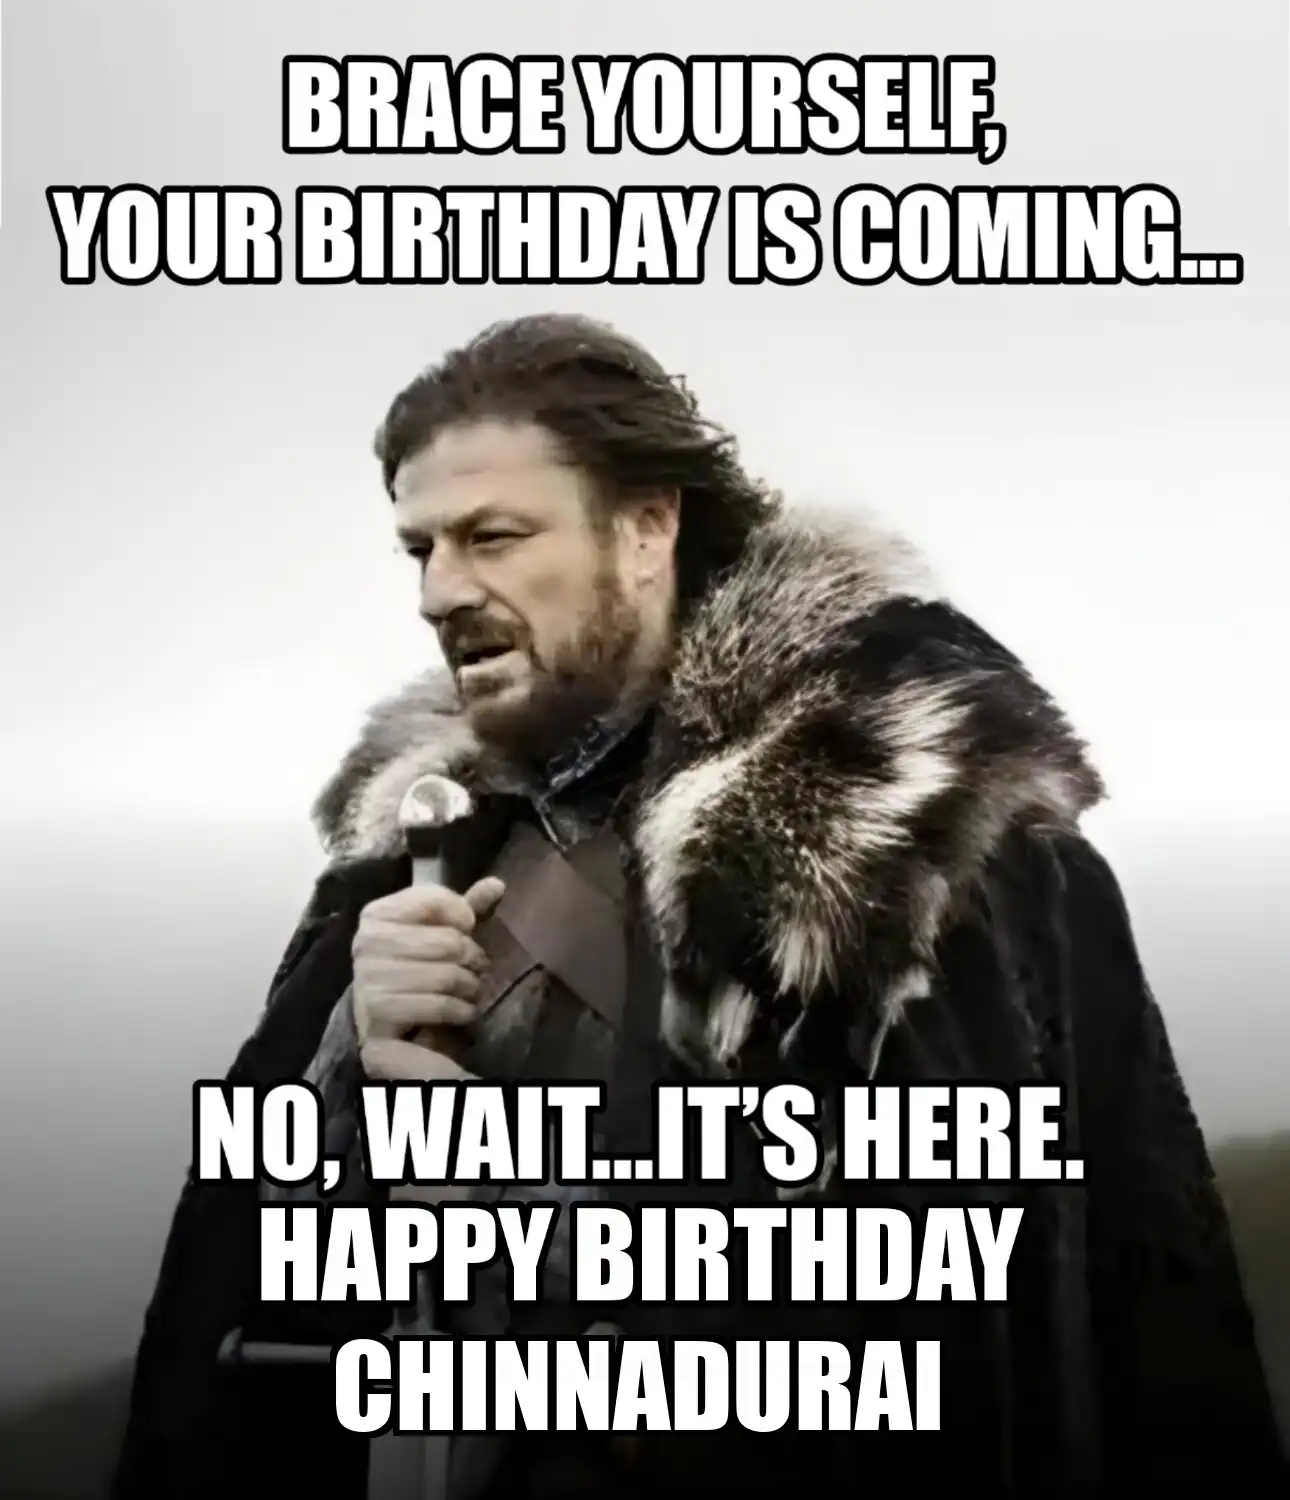 Happy Birthday Chinnadurai Brace Yourself Your Birthday Is Coming Meme